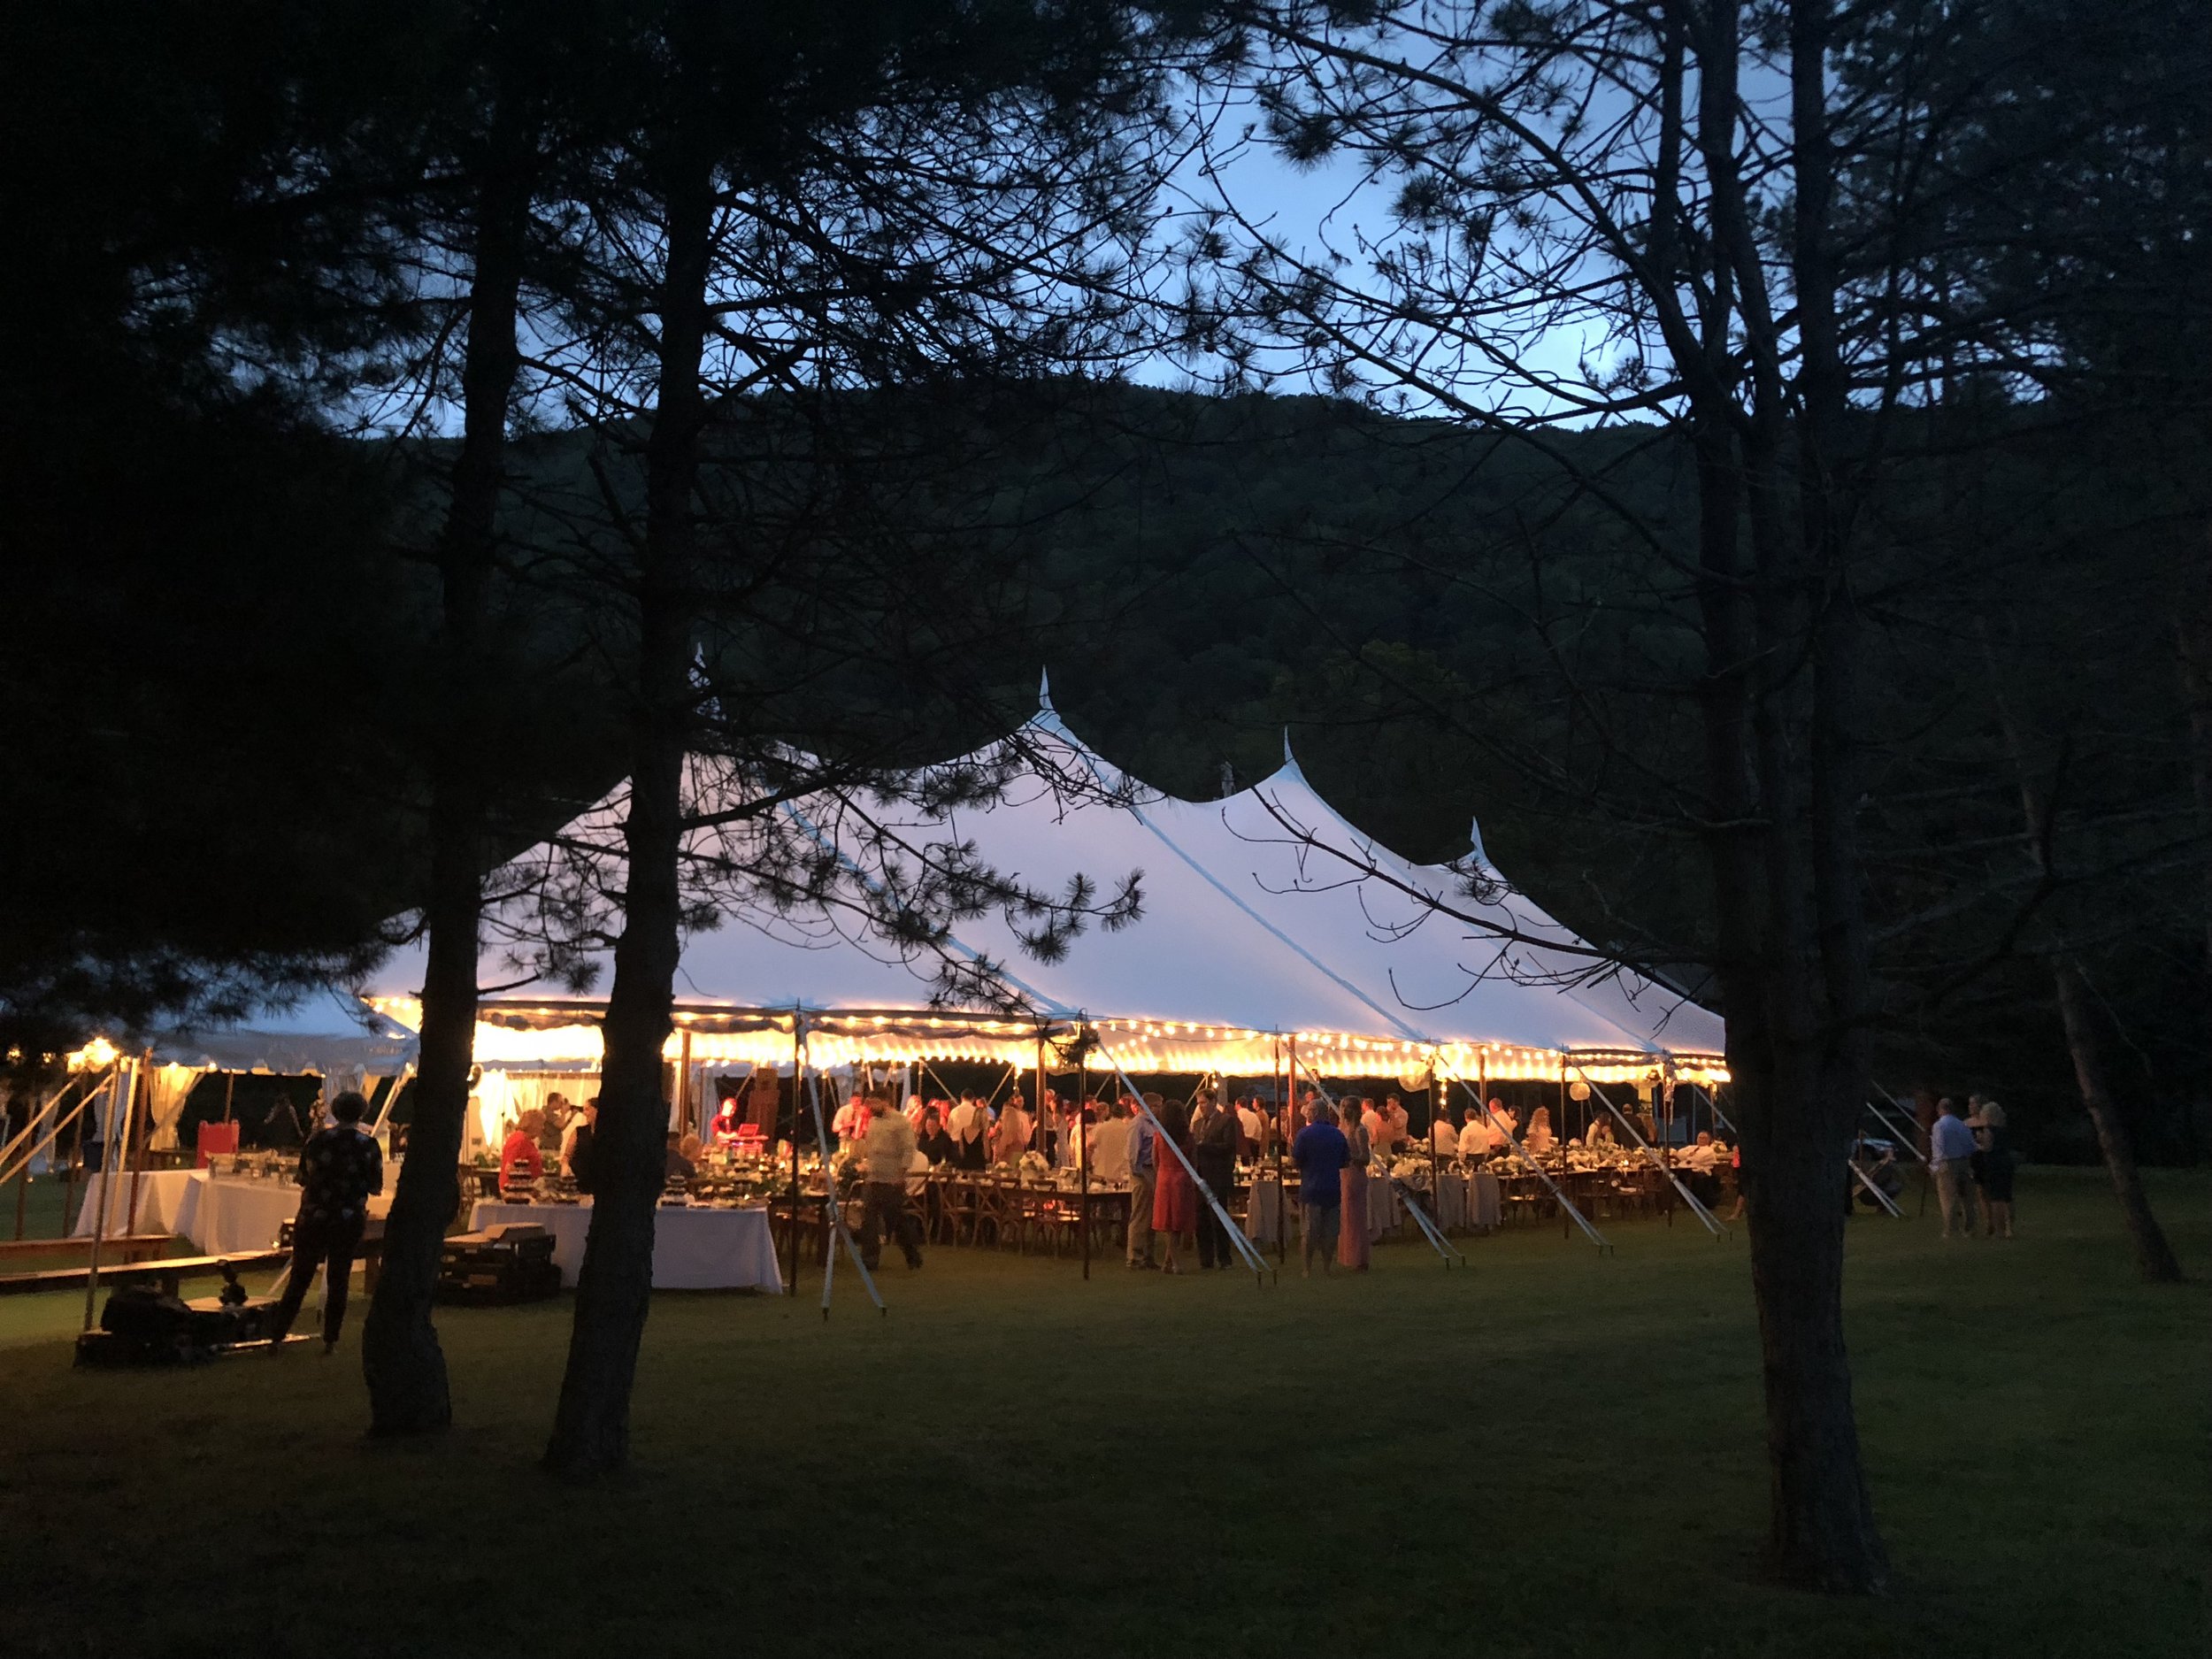 Outdoor tent wedding in the trees